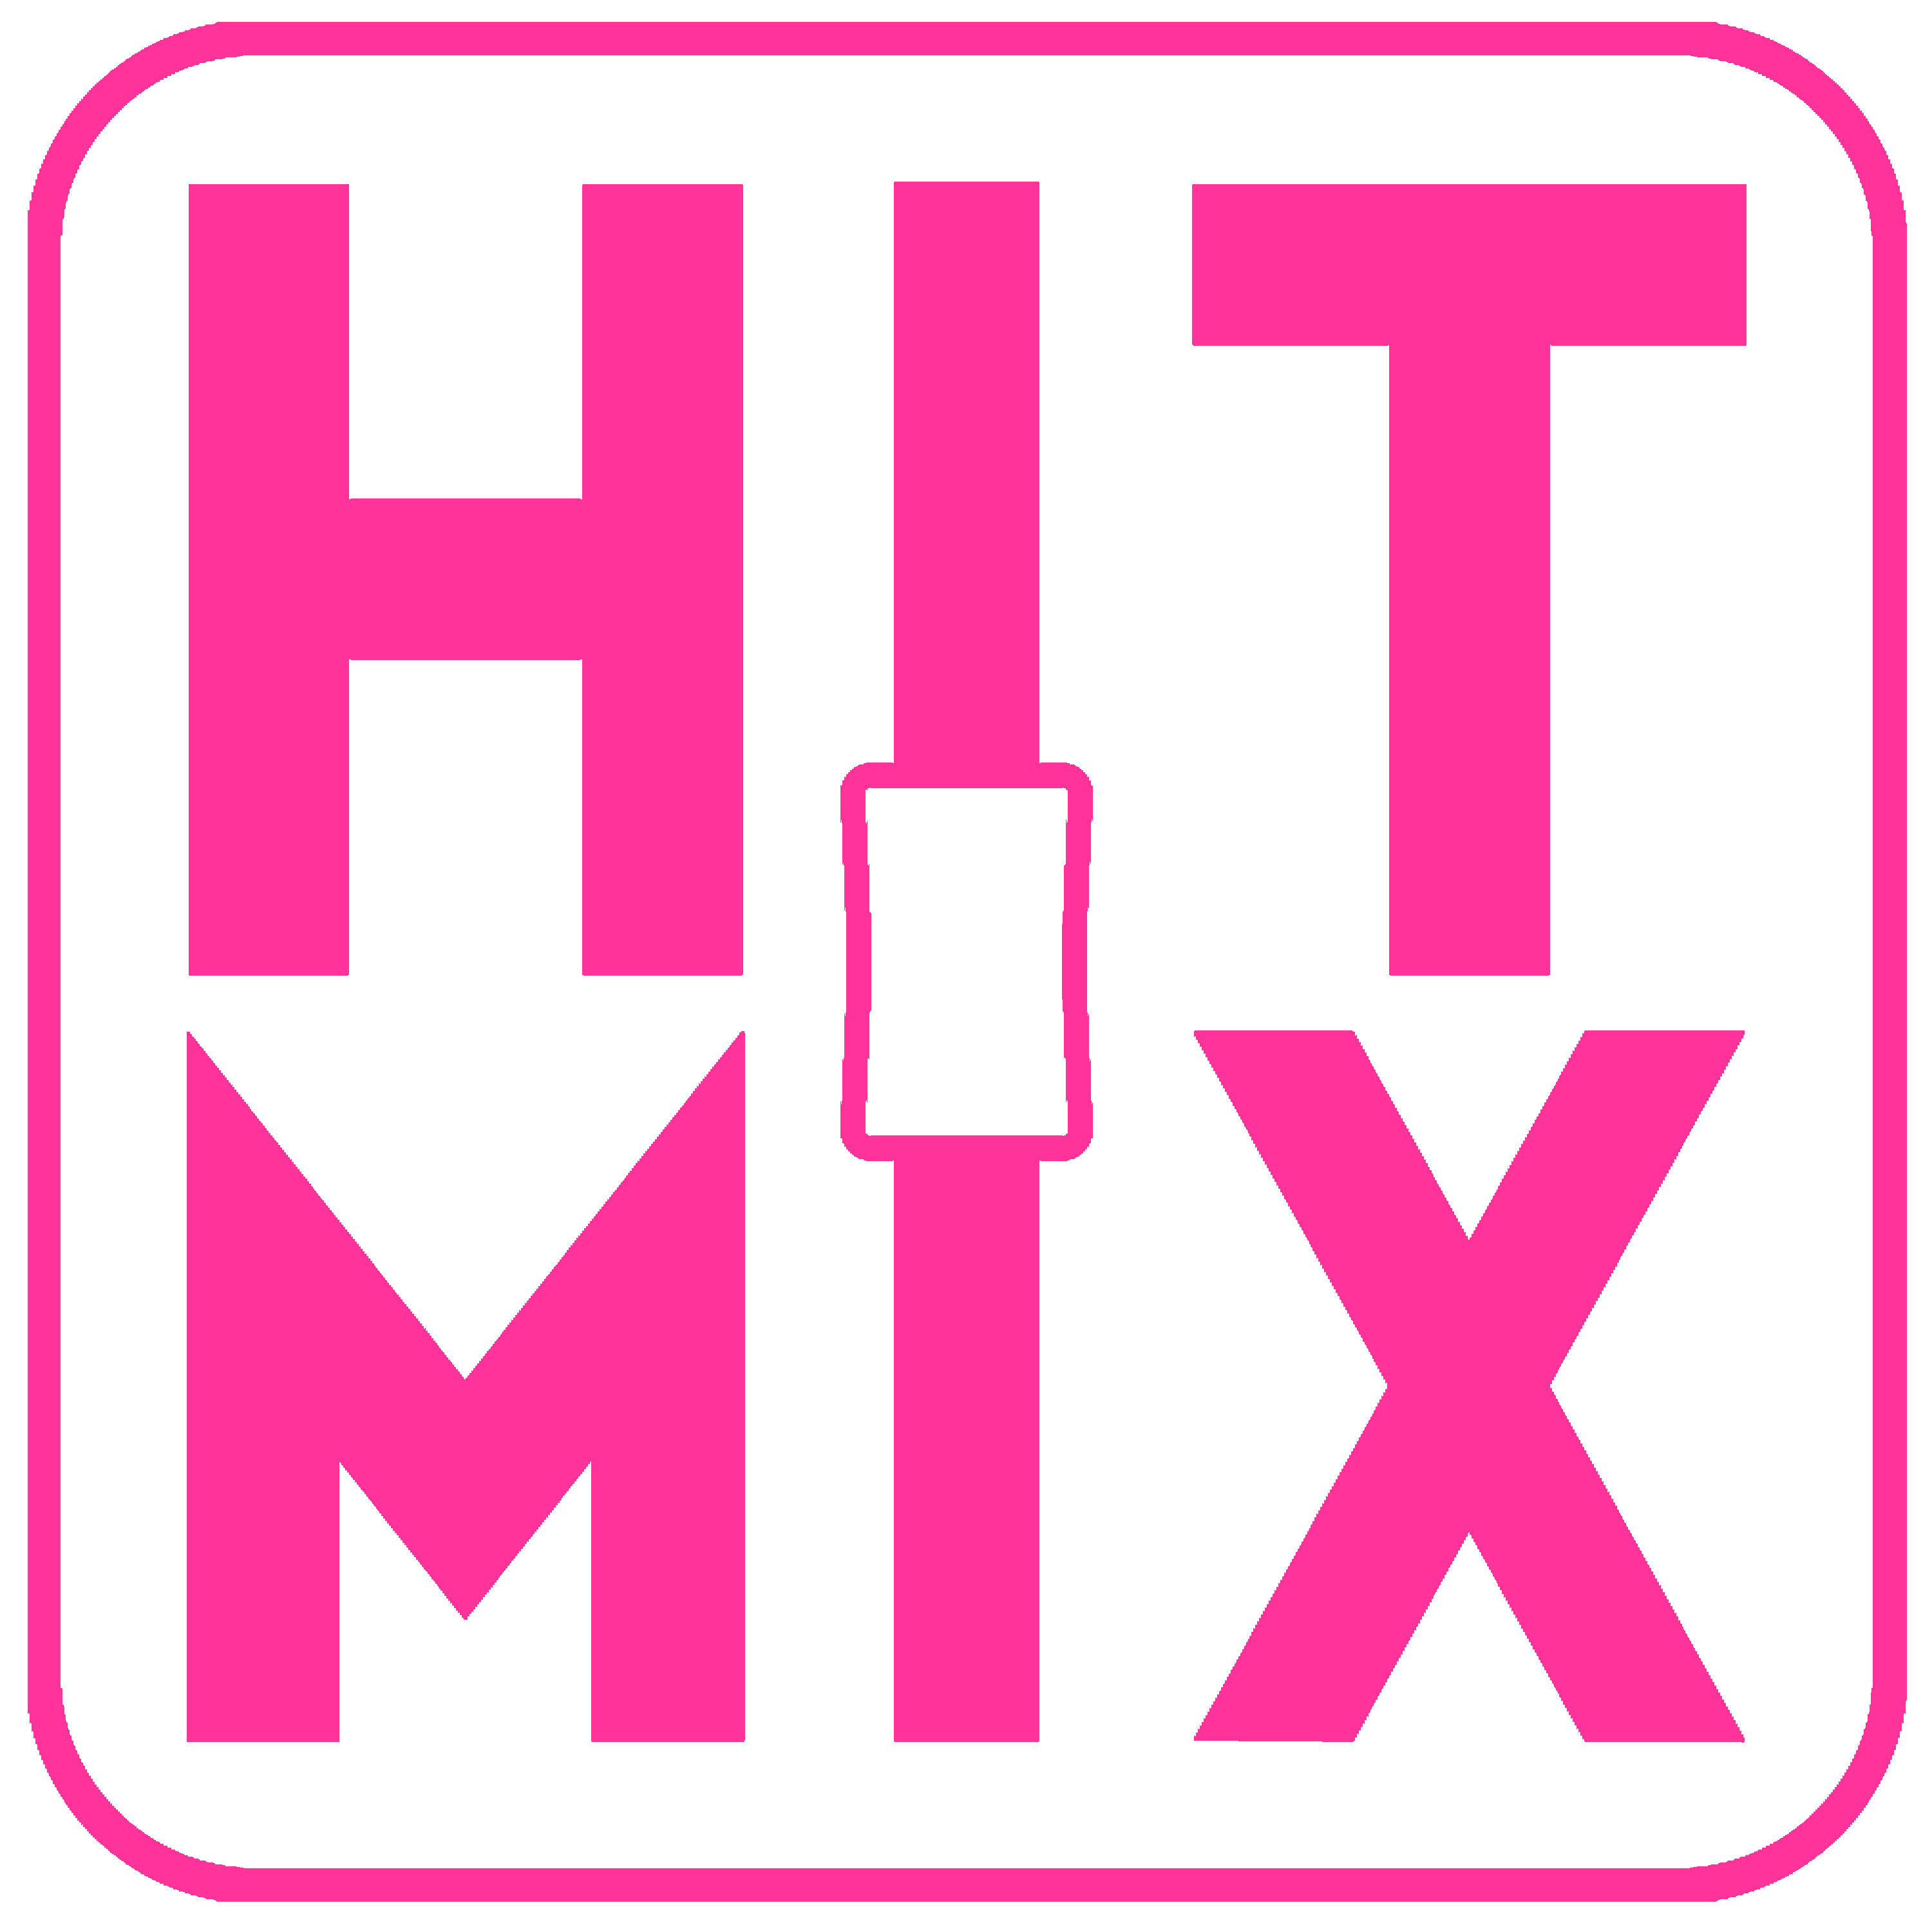 Hitmix Music